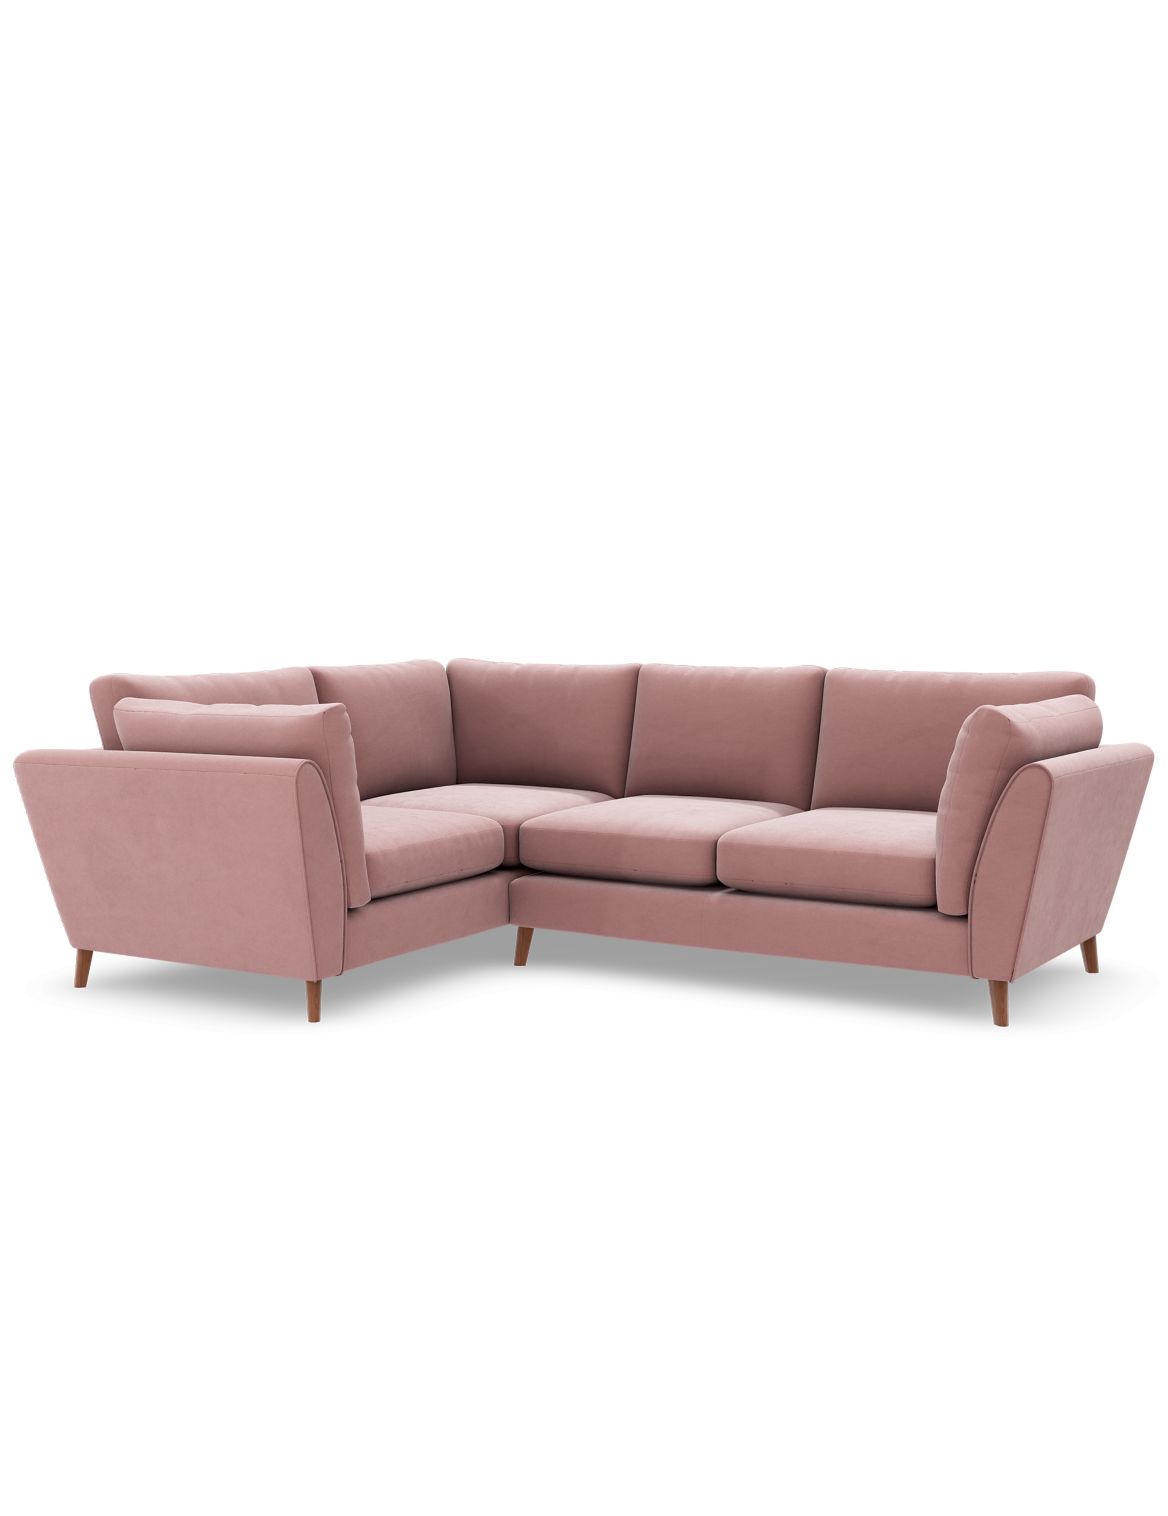 Finch Small Corner Sofa (Left-Hand) pink